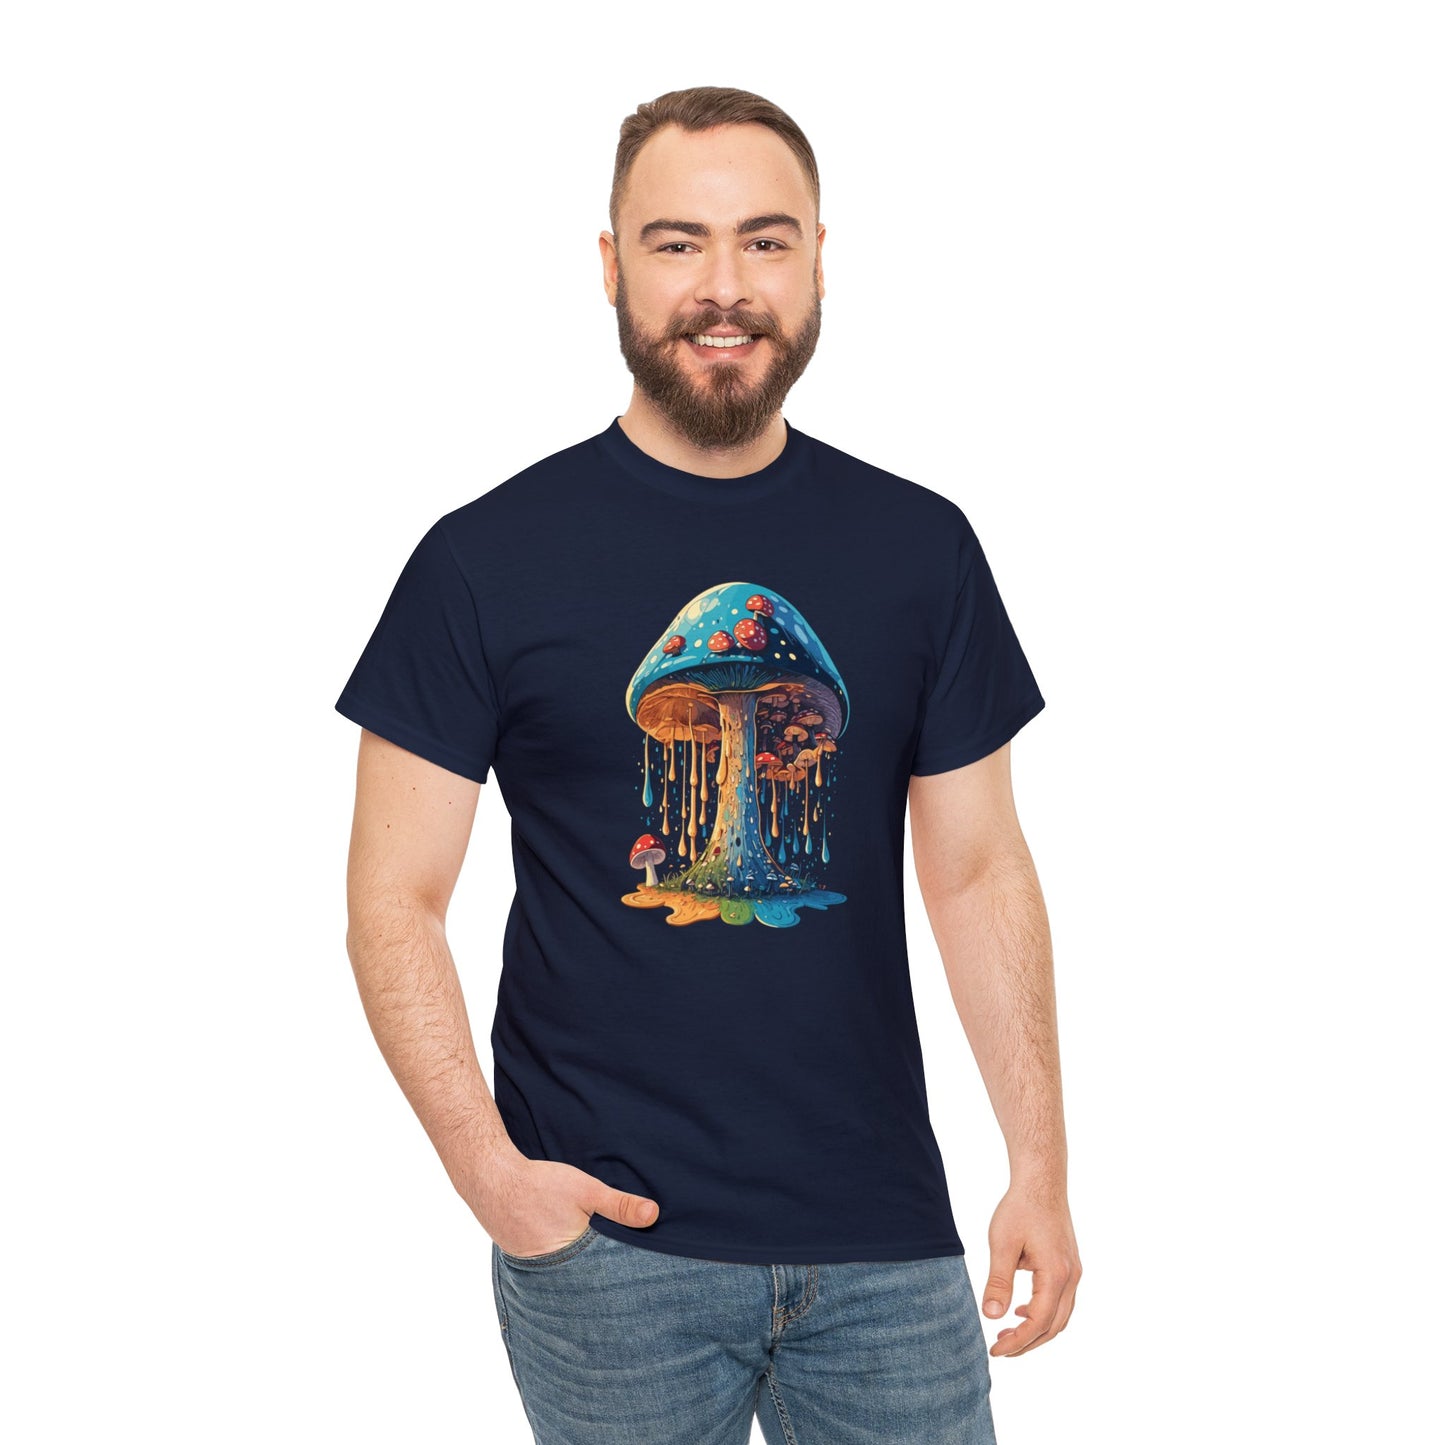 Mushroom T-Shirt For Toadstool T Shirt For Fungi TShirt For Cottagecore Tee